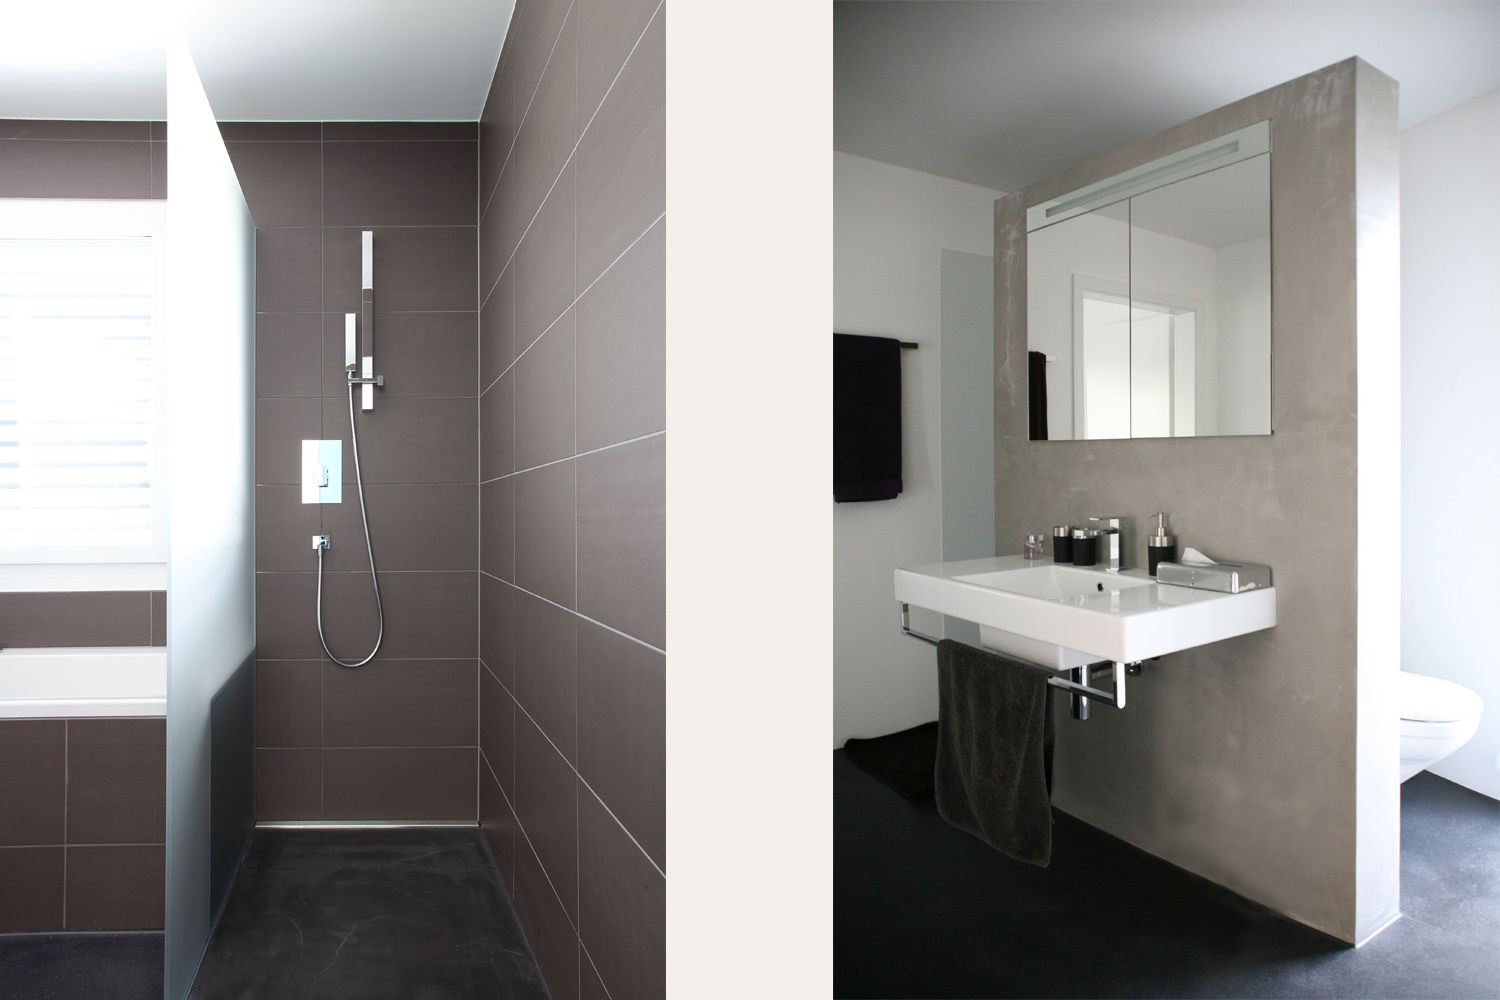 EFH Busswil, skizzenROLLE skizzenROLLE Modern bathroom